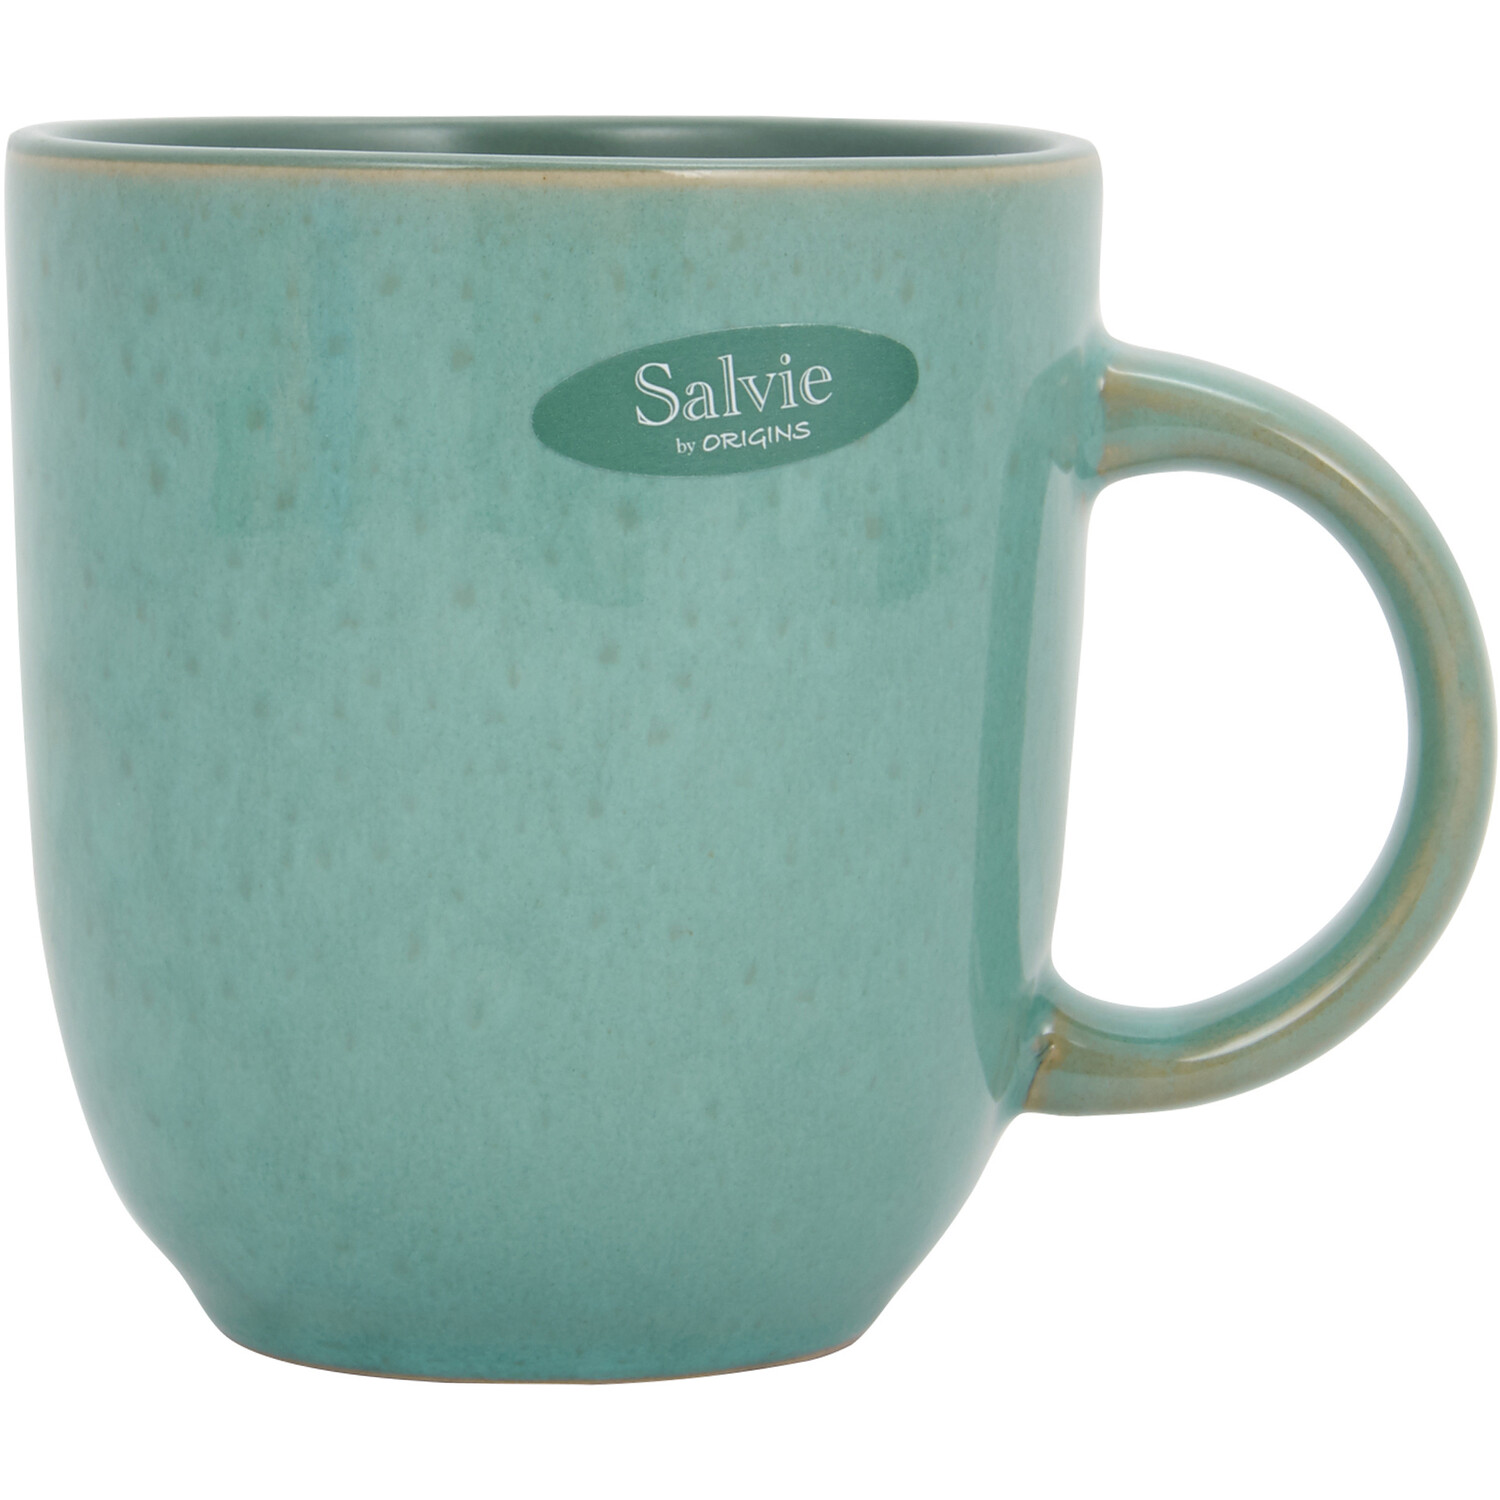 Salvie Reactive Glaze Bullet Mug - Green Image 1